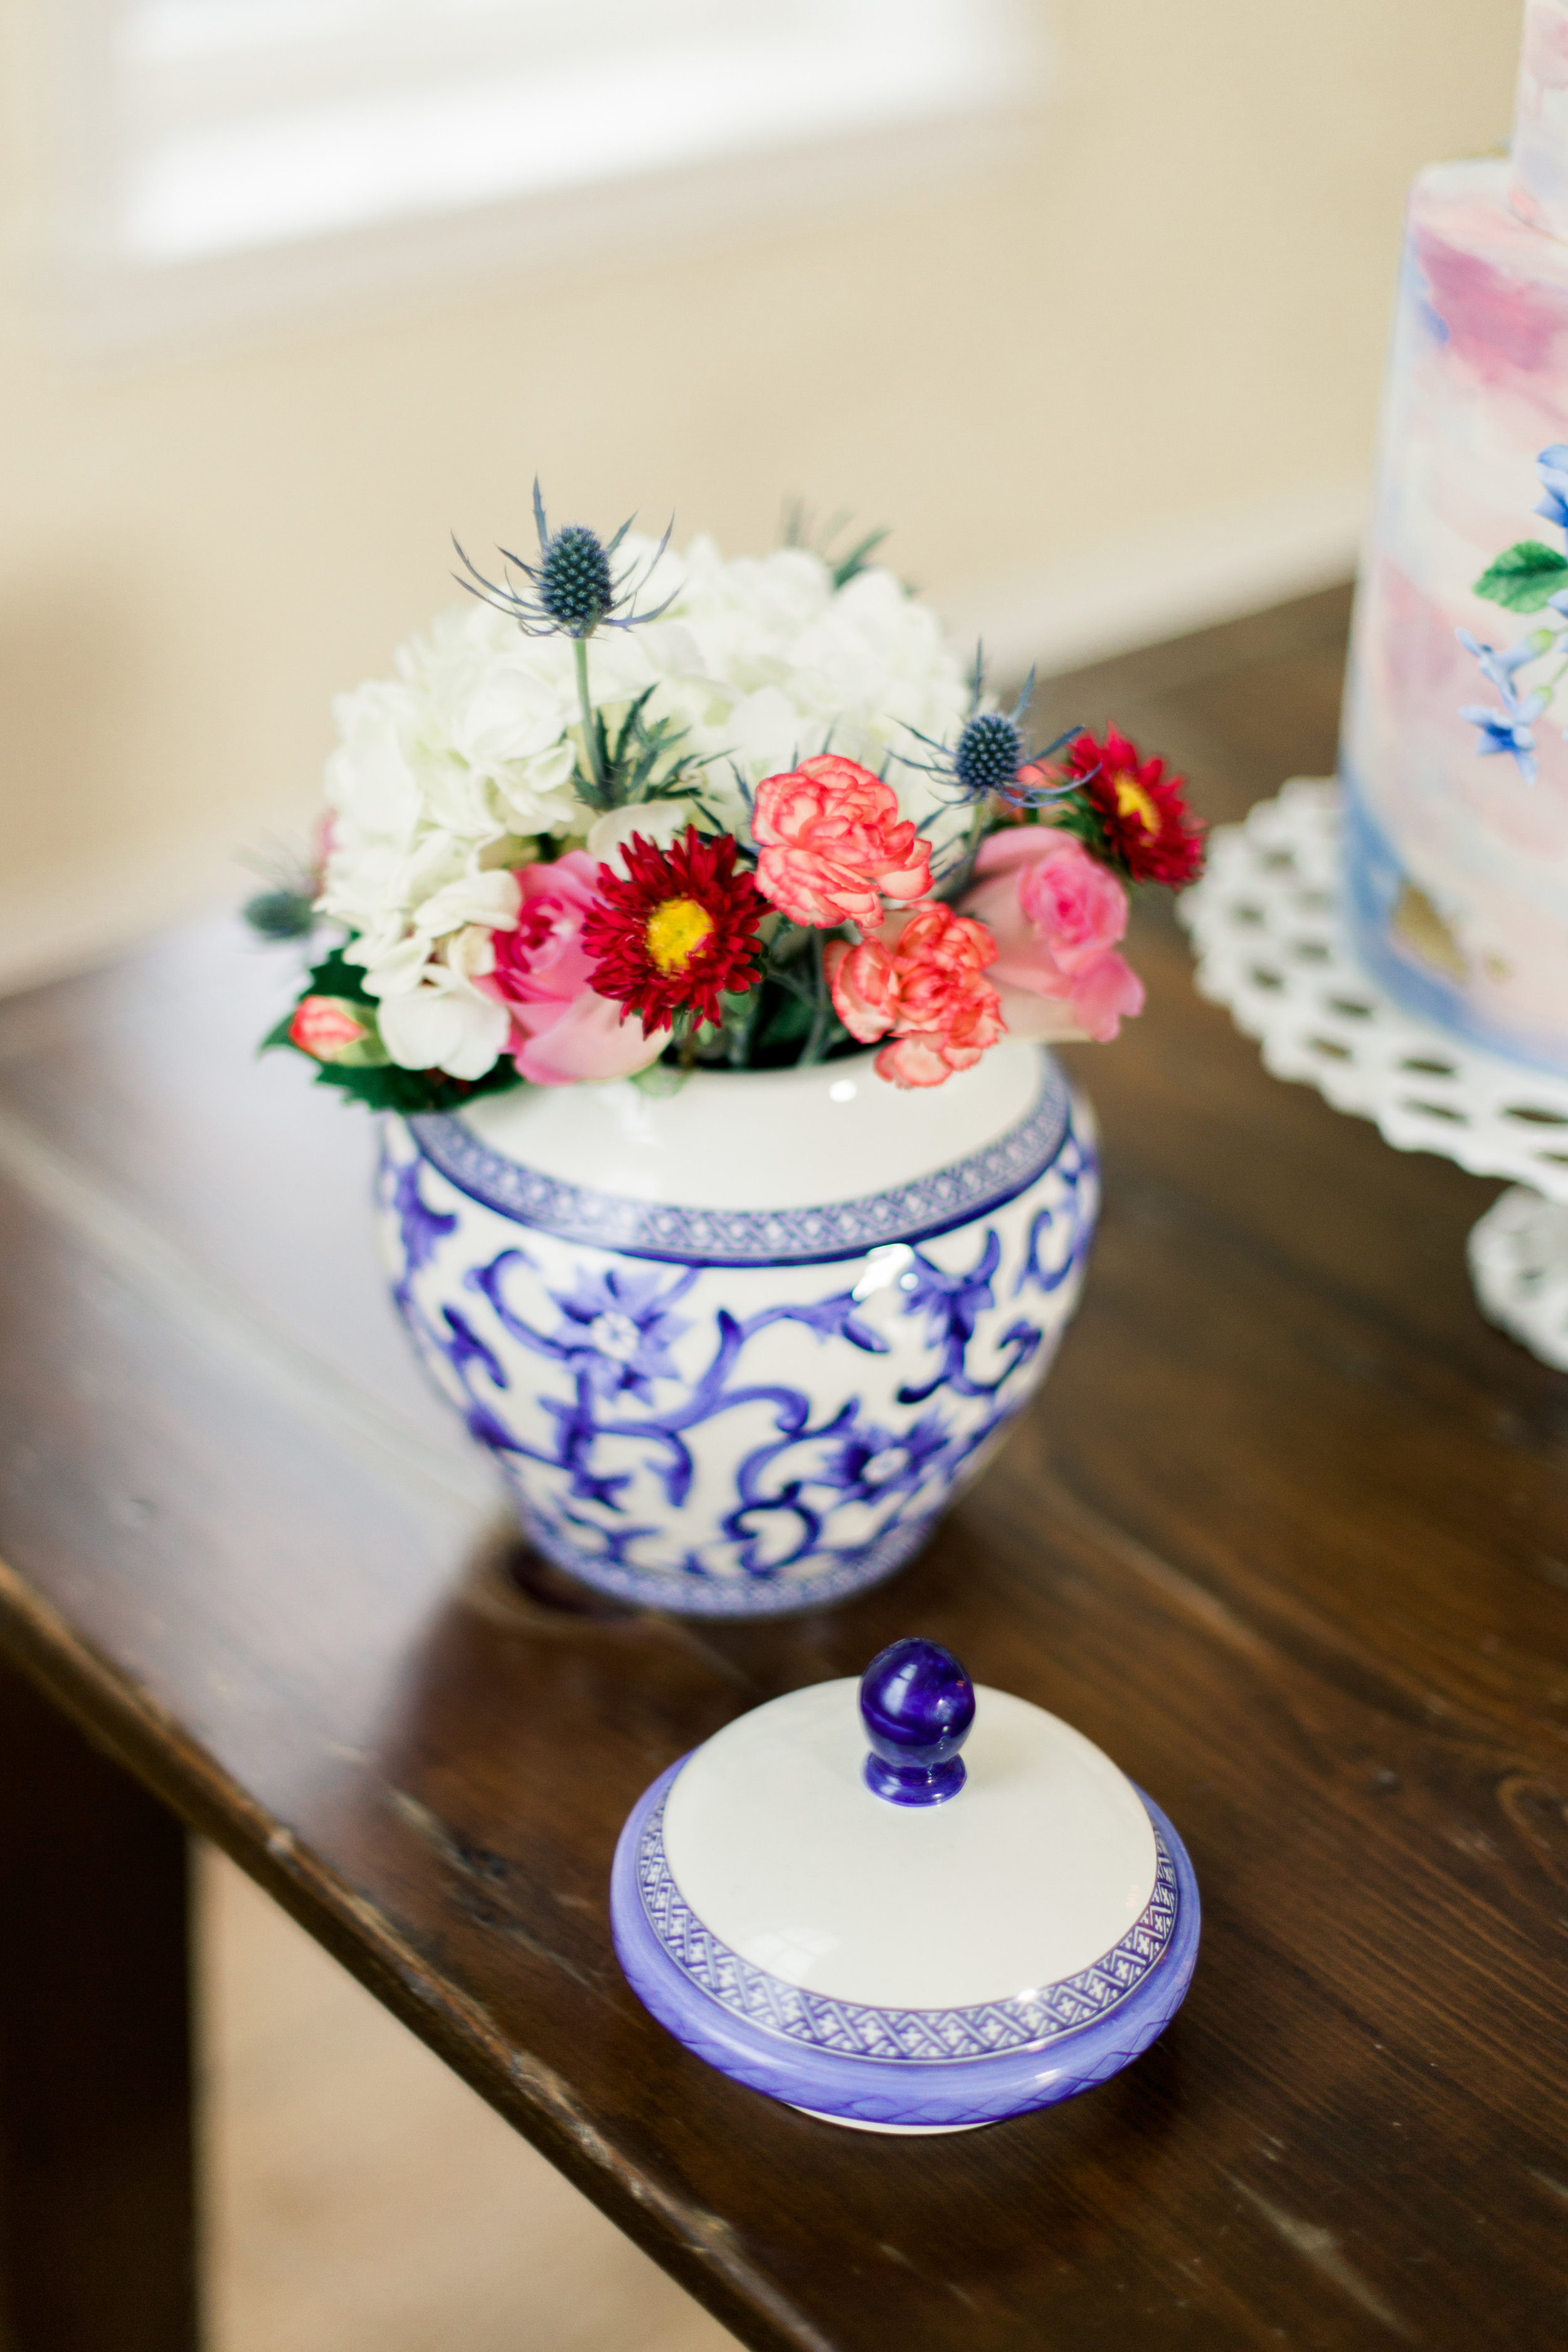 A Romantic Milton Ridge Historic Chapel Wedding - Maryland Wedding -- Wedding Blog - The Overwhelmed Bride